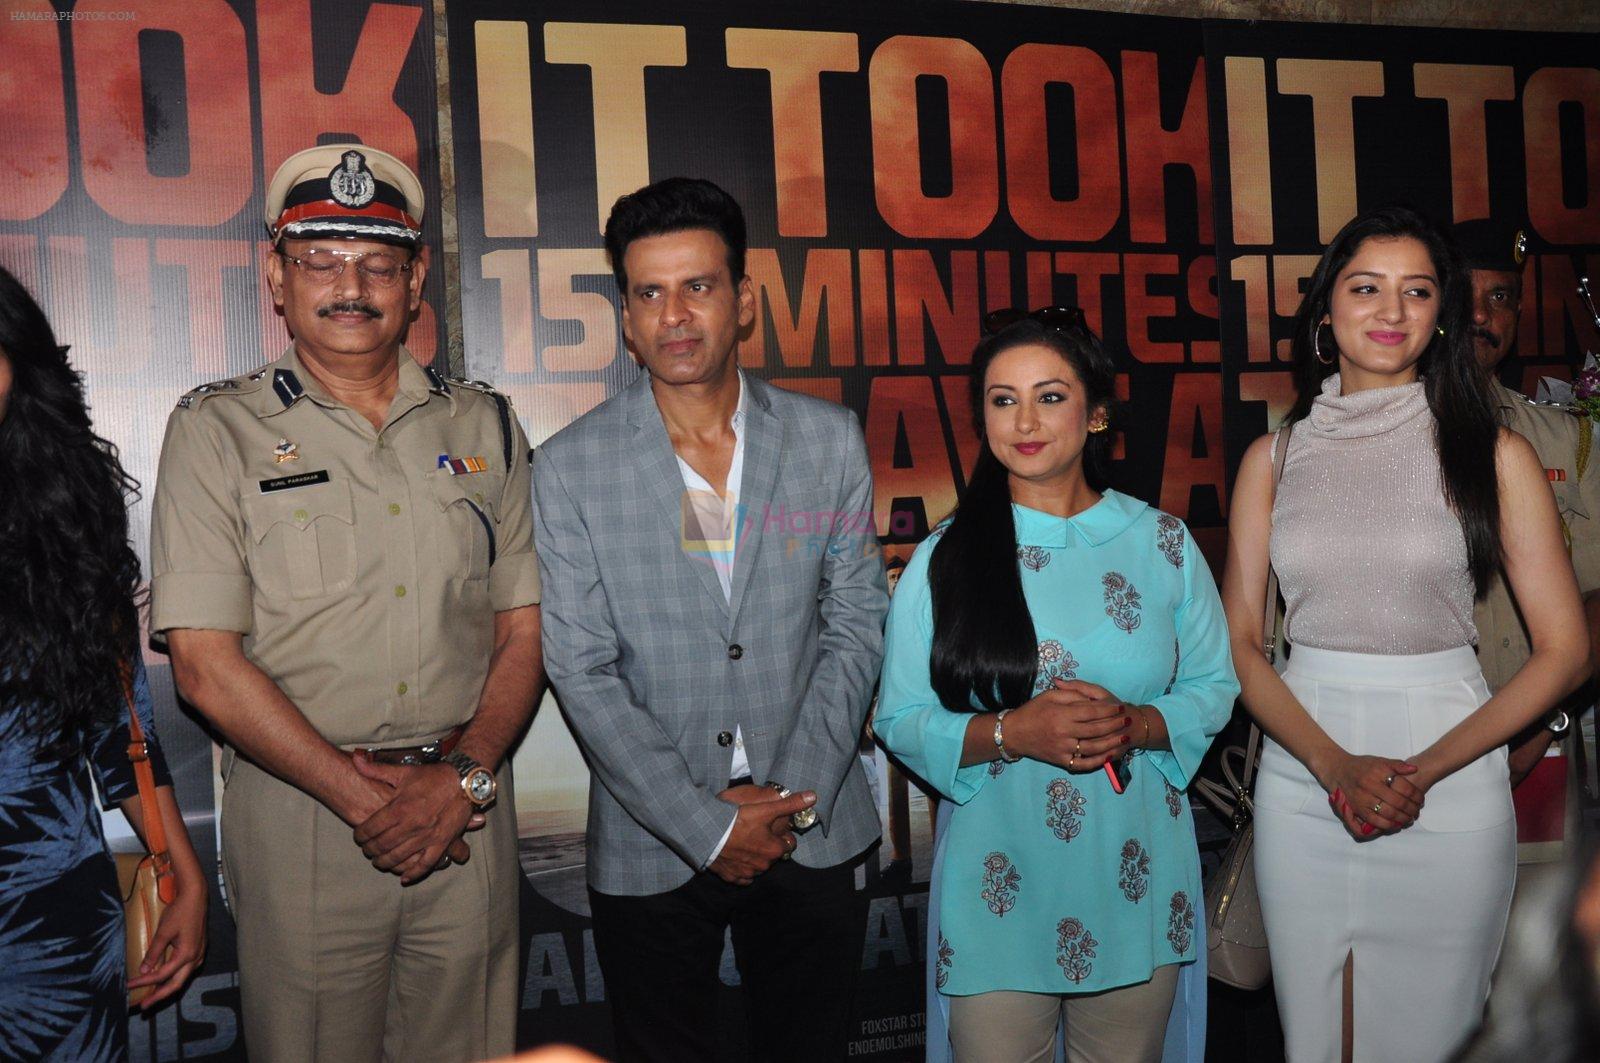 Manoj Bajpai, Divya Dutta at Traffic Jam film trailer launch in Mumbai on 13th April 2016